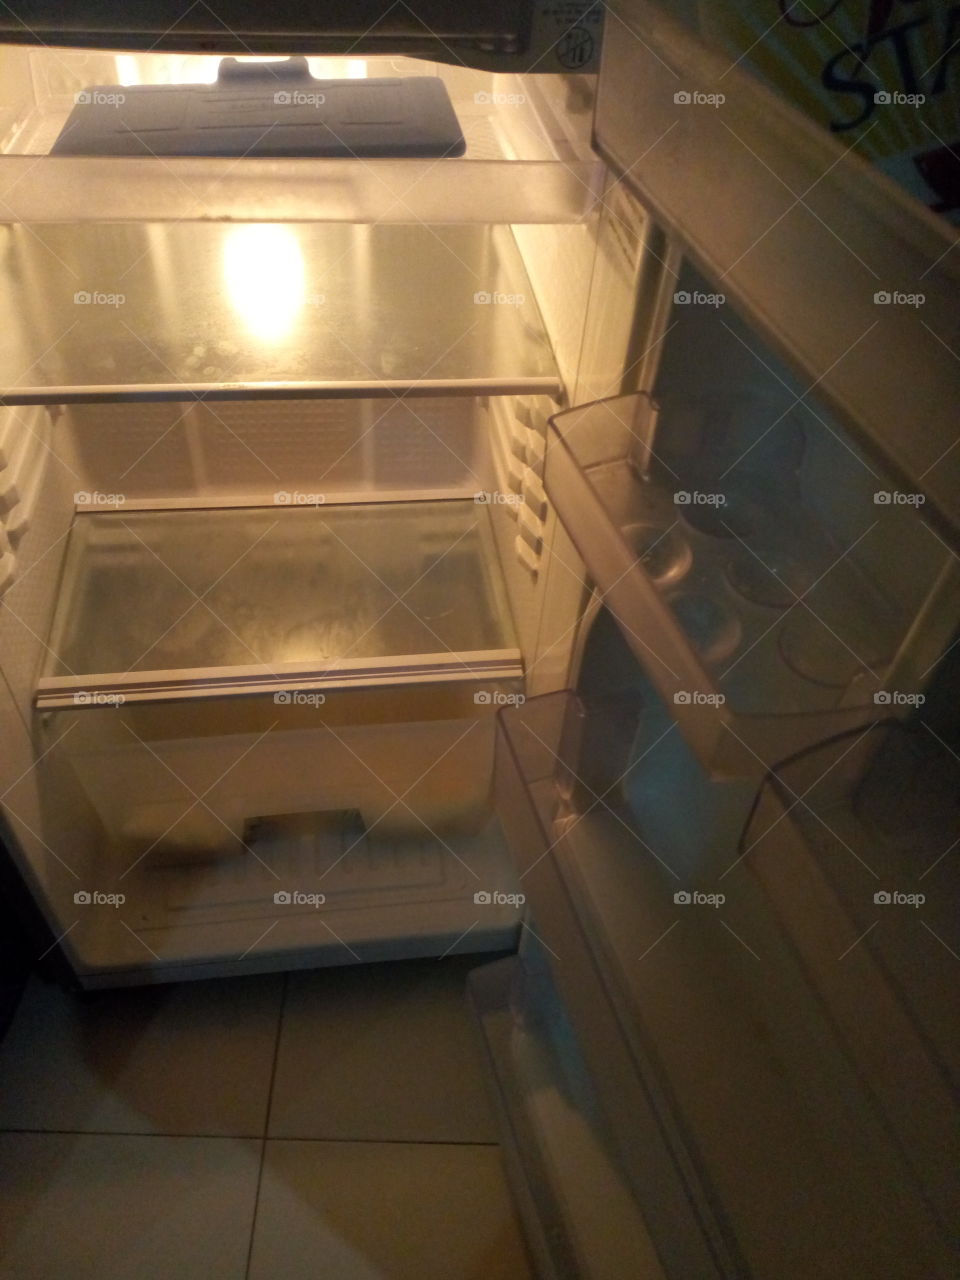 in the freezer